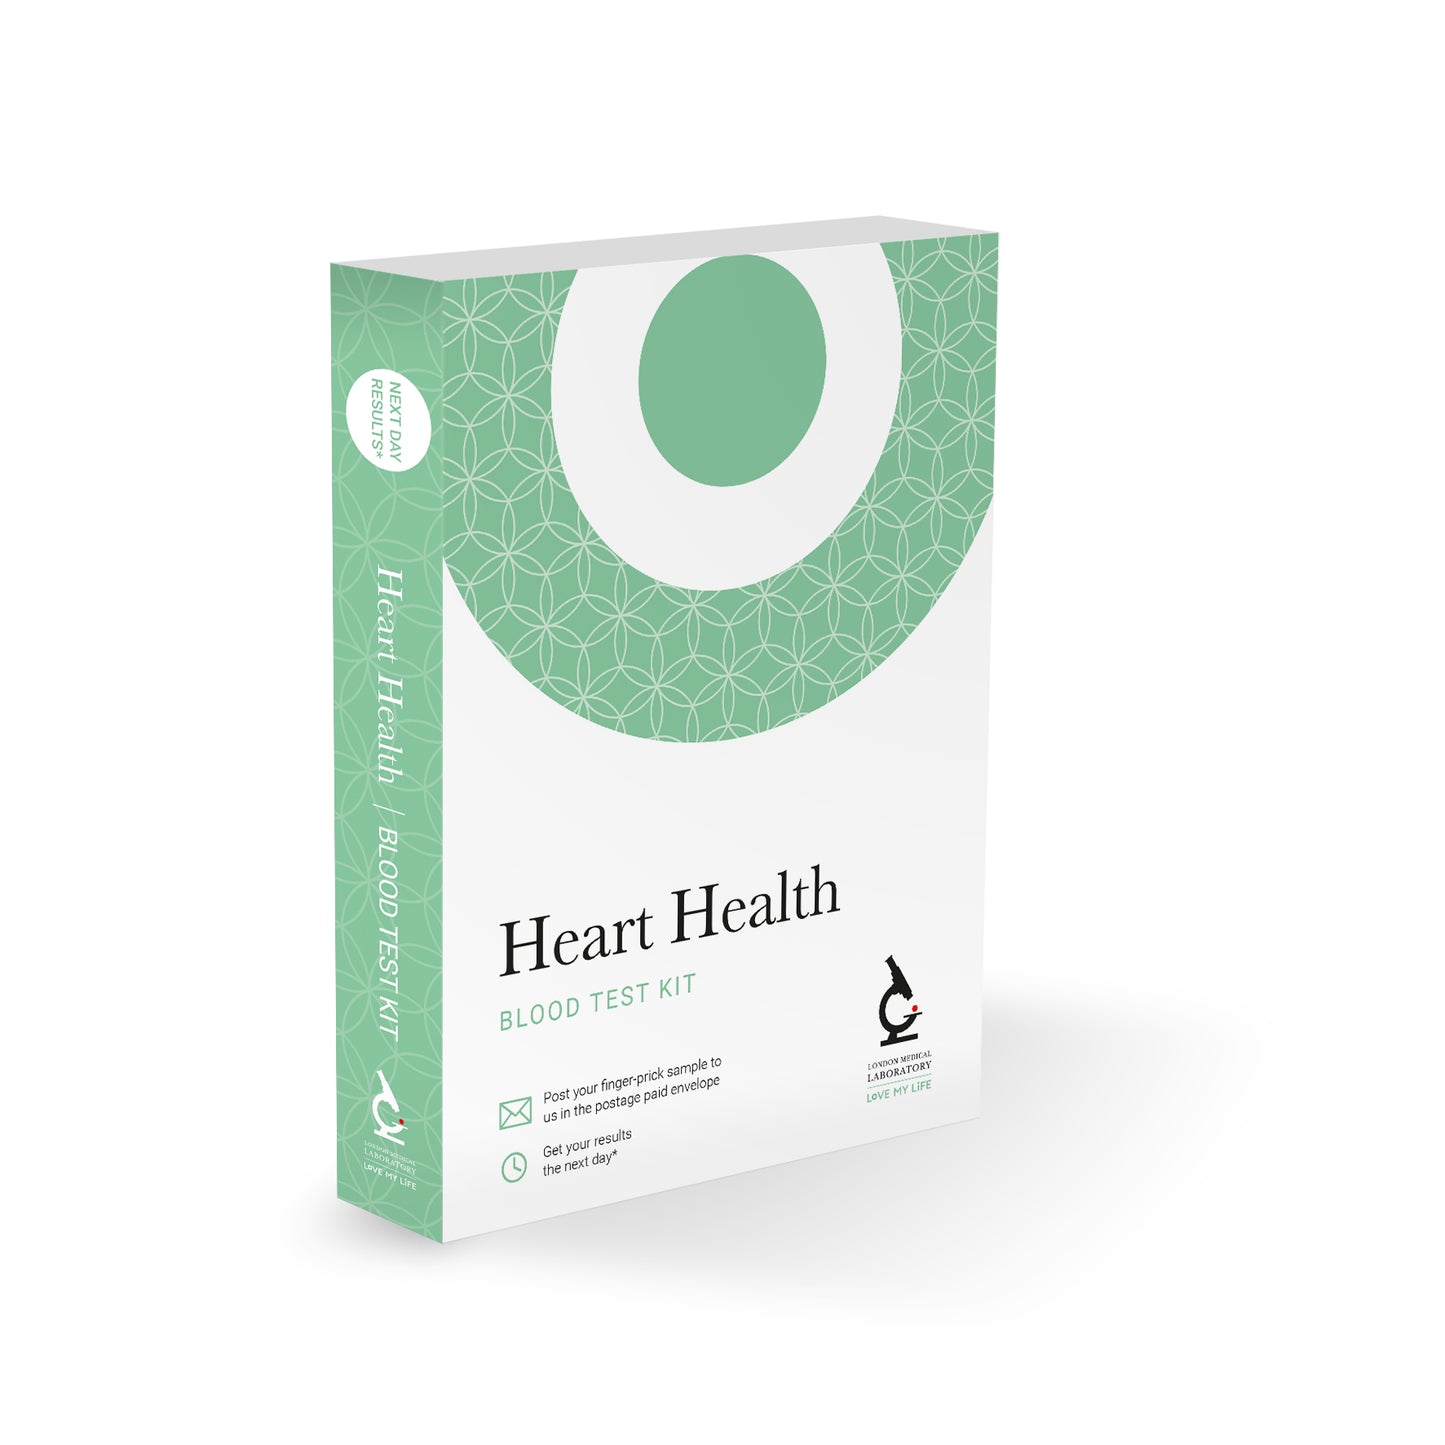 Heart Health Test